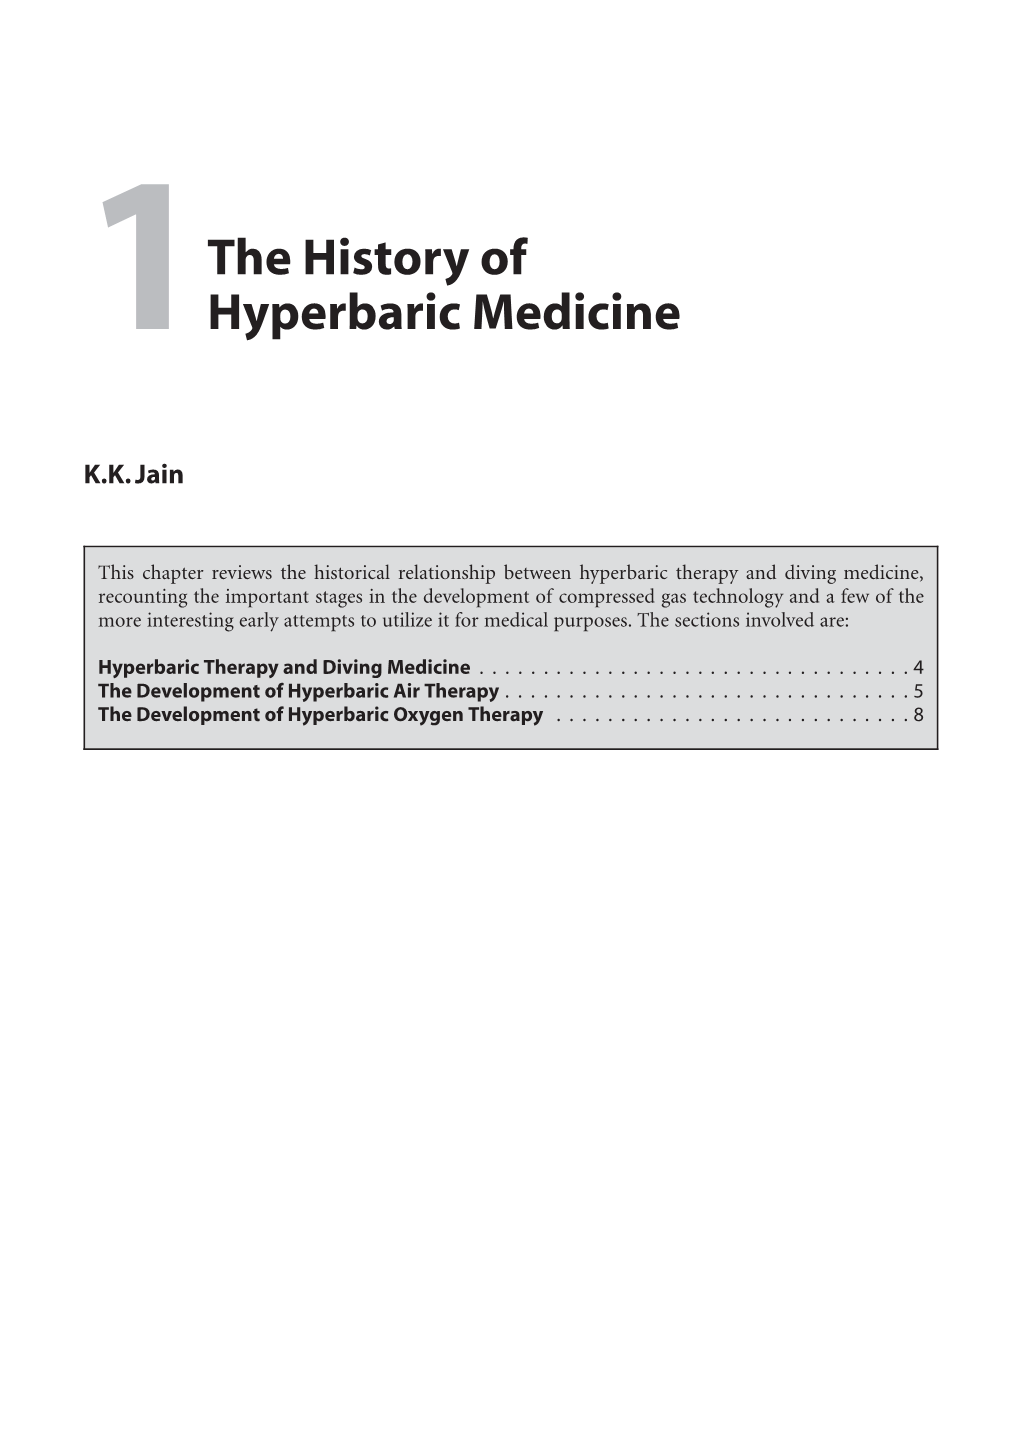 1The History of Hyperbaric Medicine